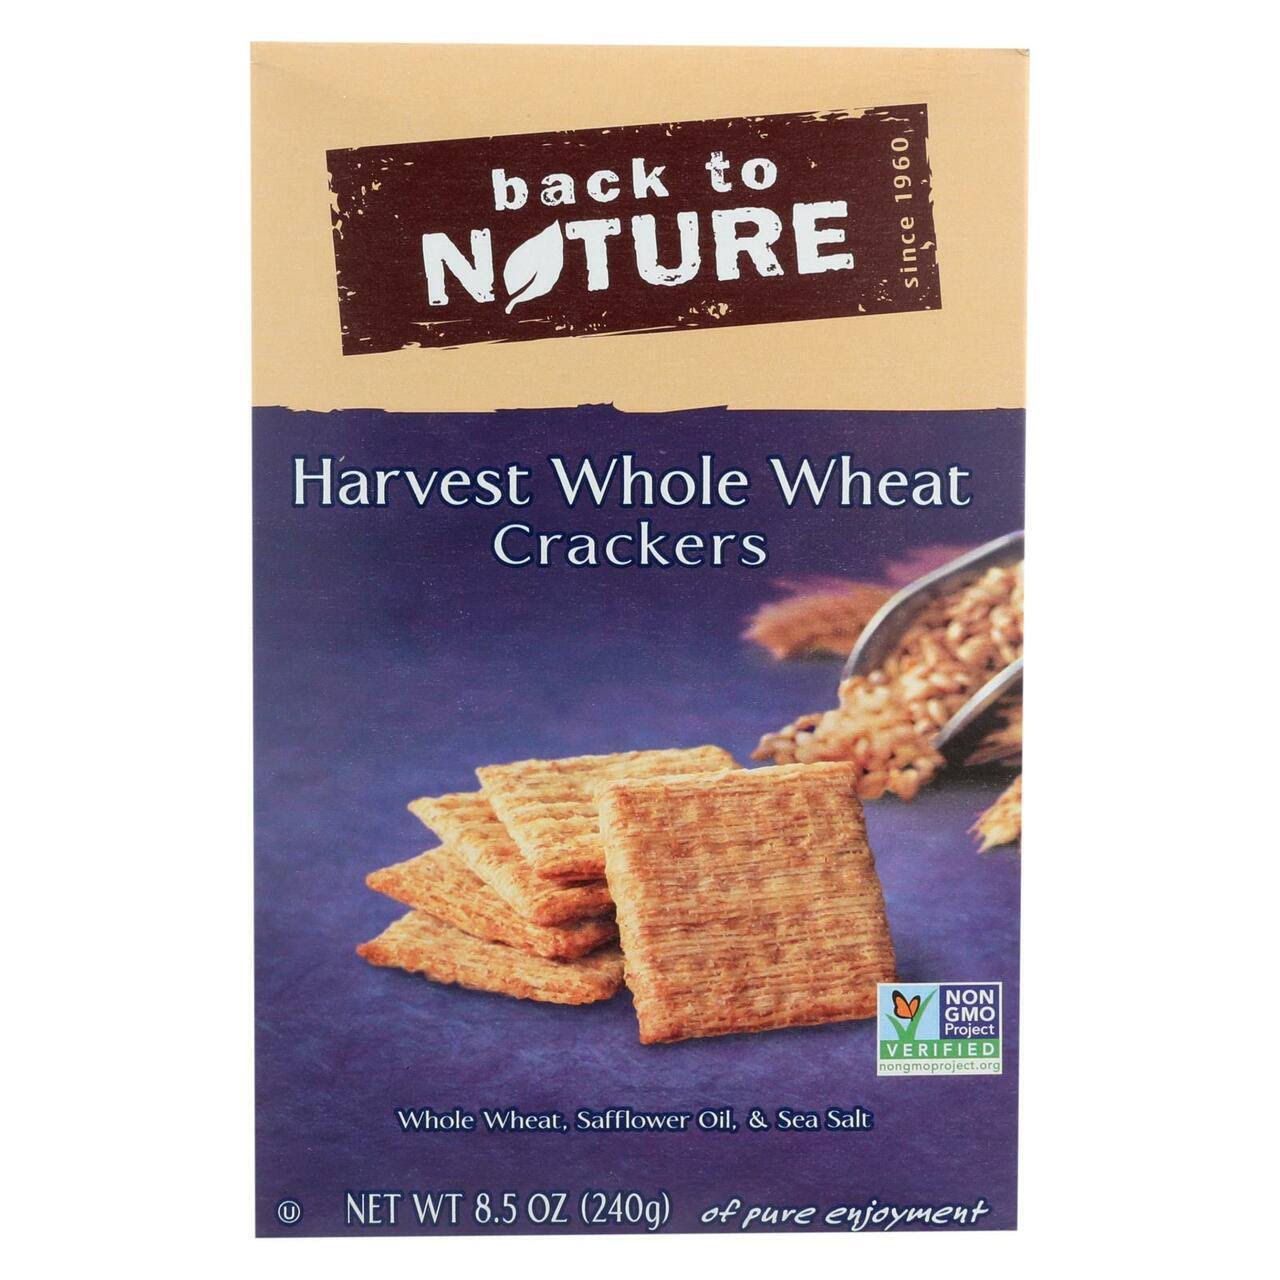 Back to Nature Harvest Whole Wheat Cracker - 240g